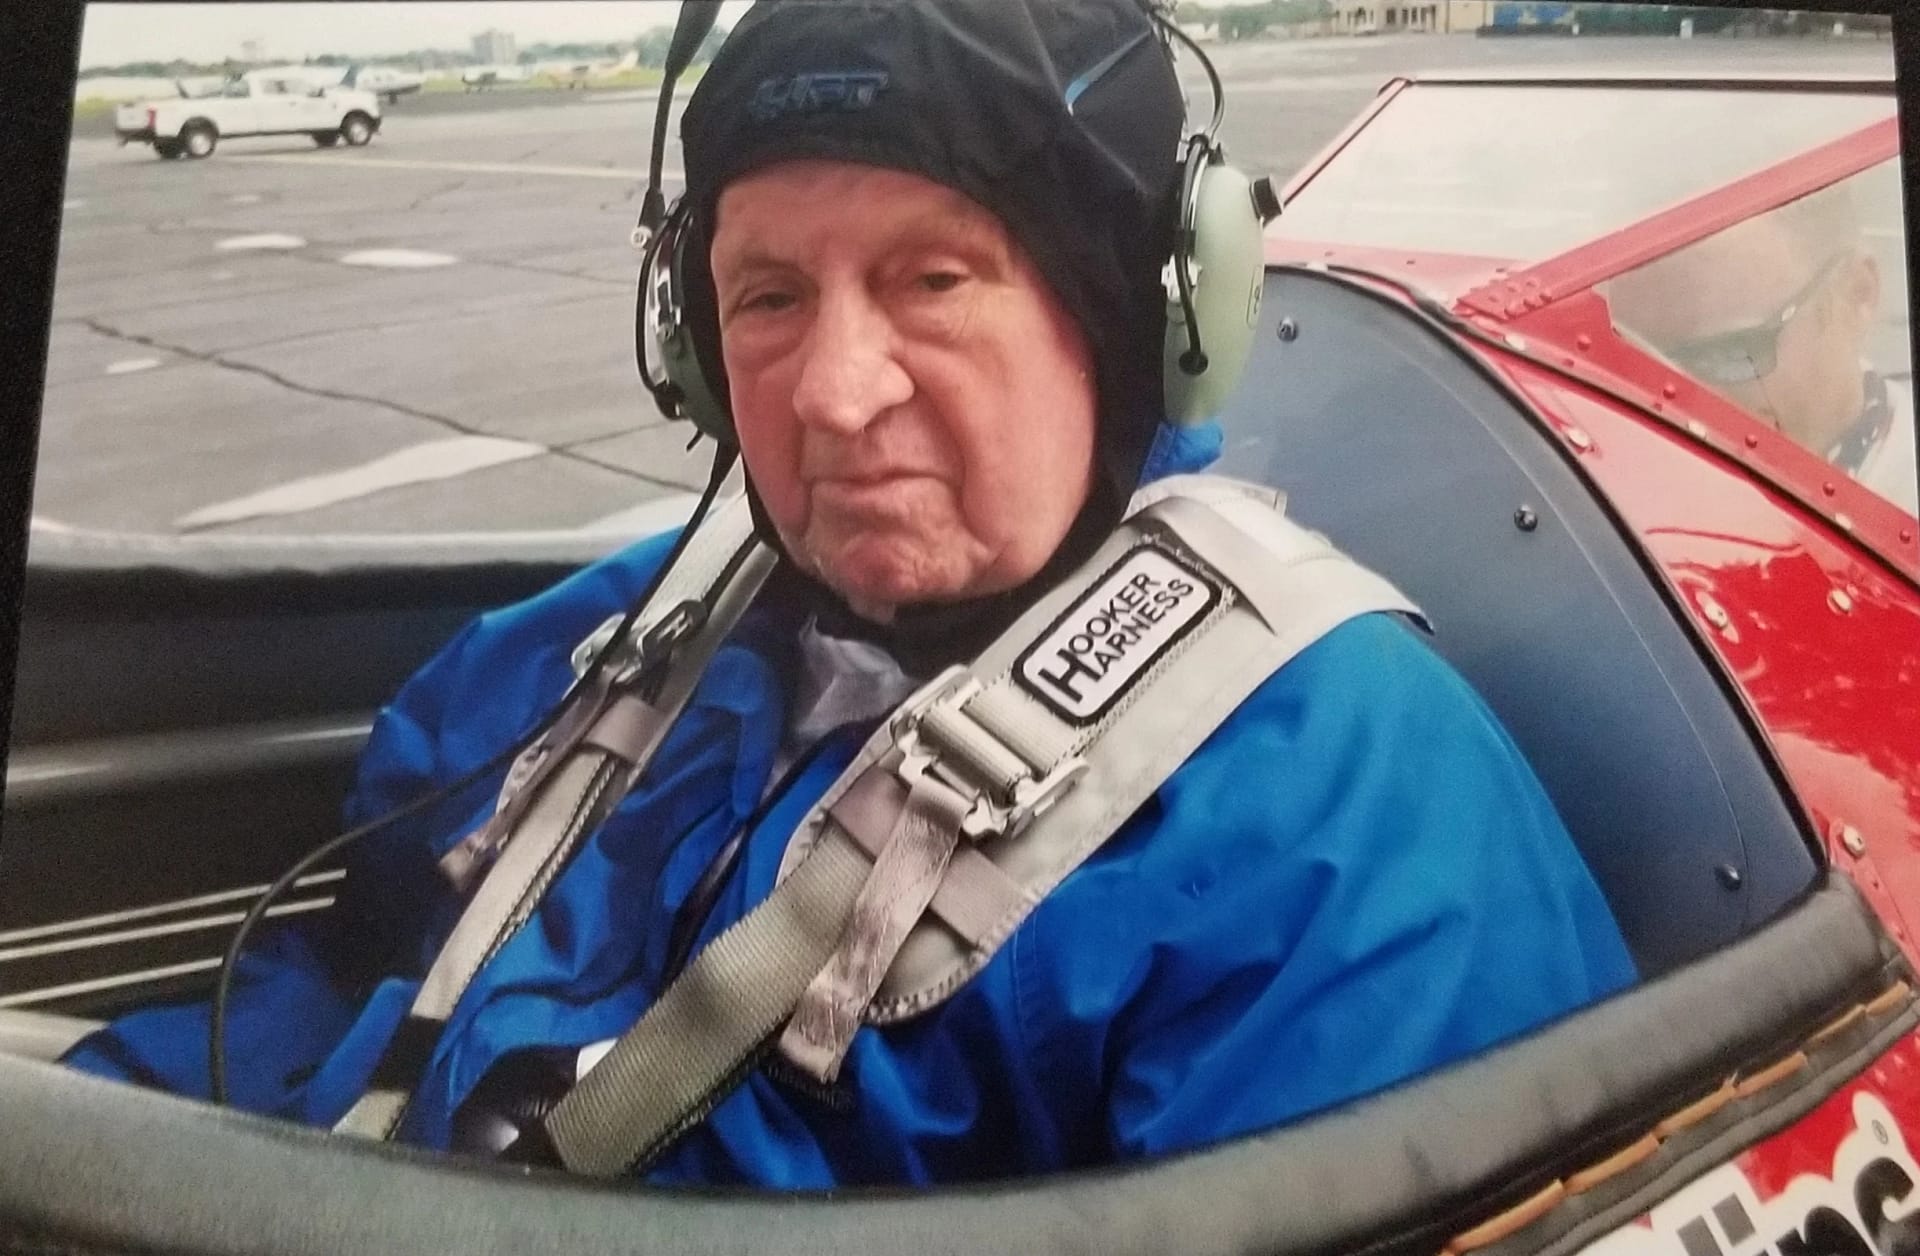 WWII veteran sitting in plane